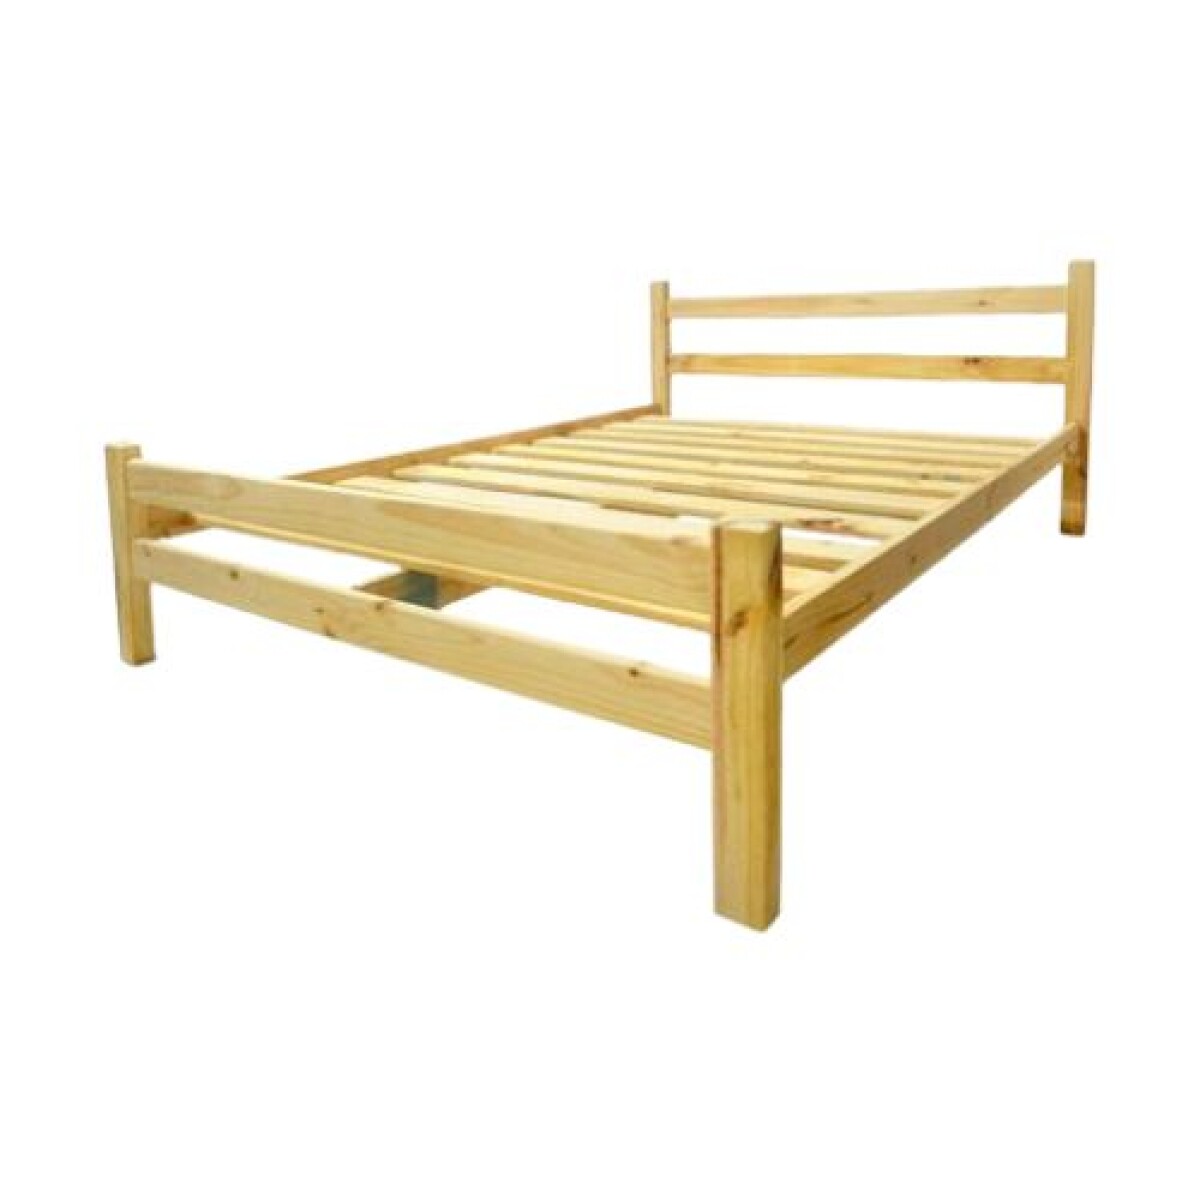 In House cama madera 2 plazas linea nacional 140 x 190 cm - LRNC2P 